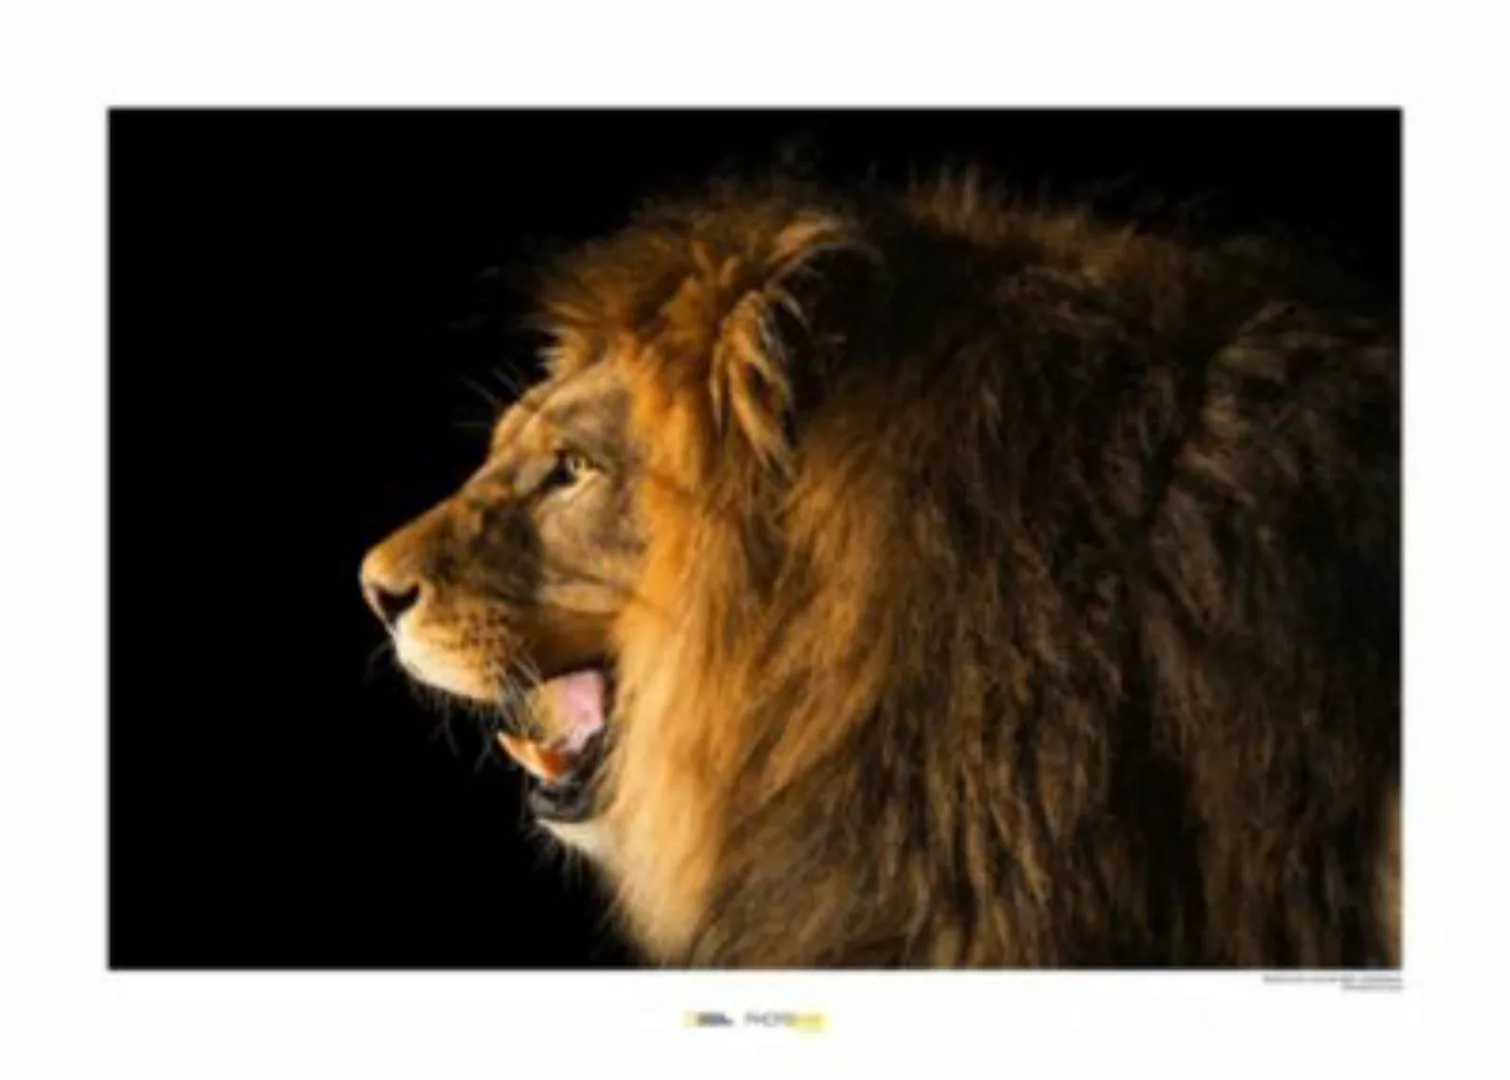 KOMAR Wandbild - Barbary Lion - Größe: 70 x 50 cm mehrfarbig Gr. one size günstig online kaufen